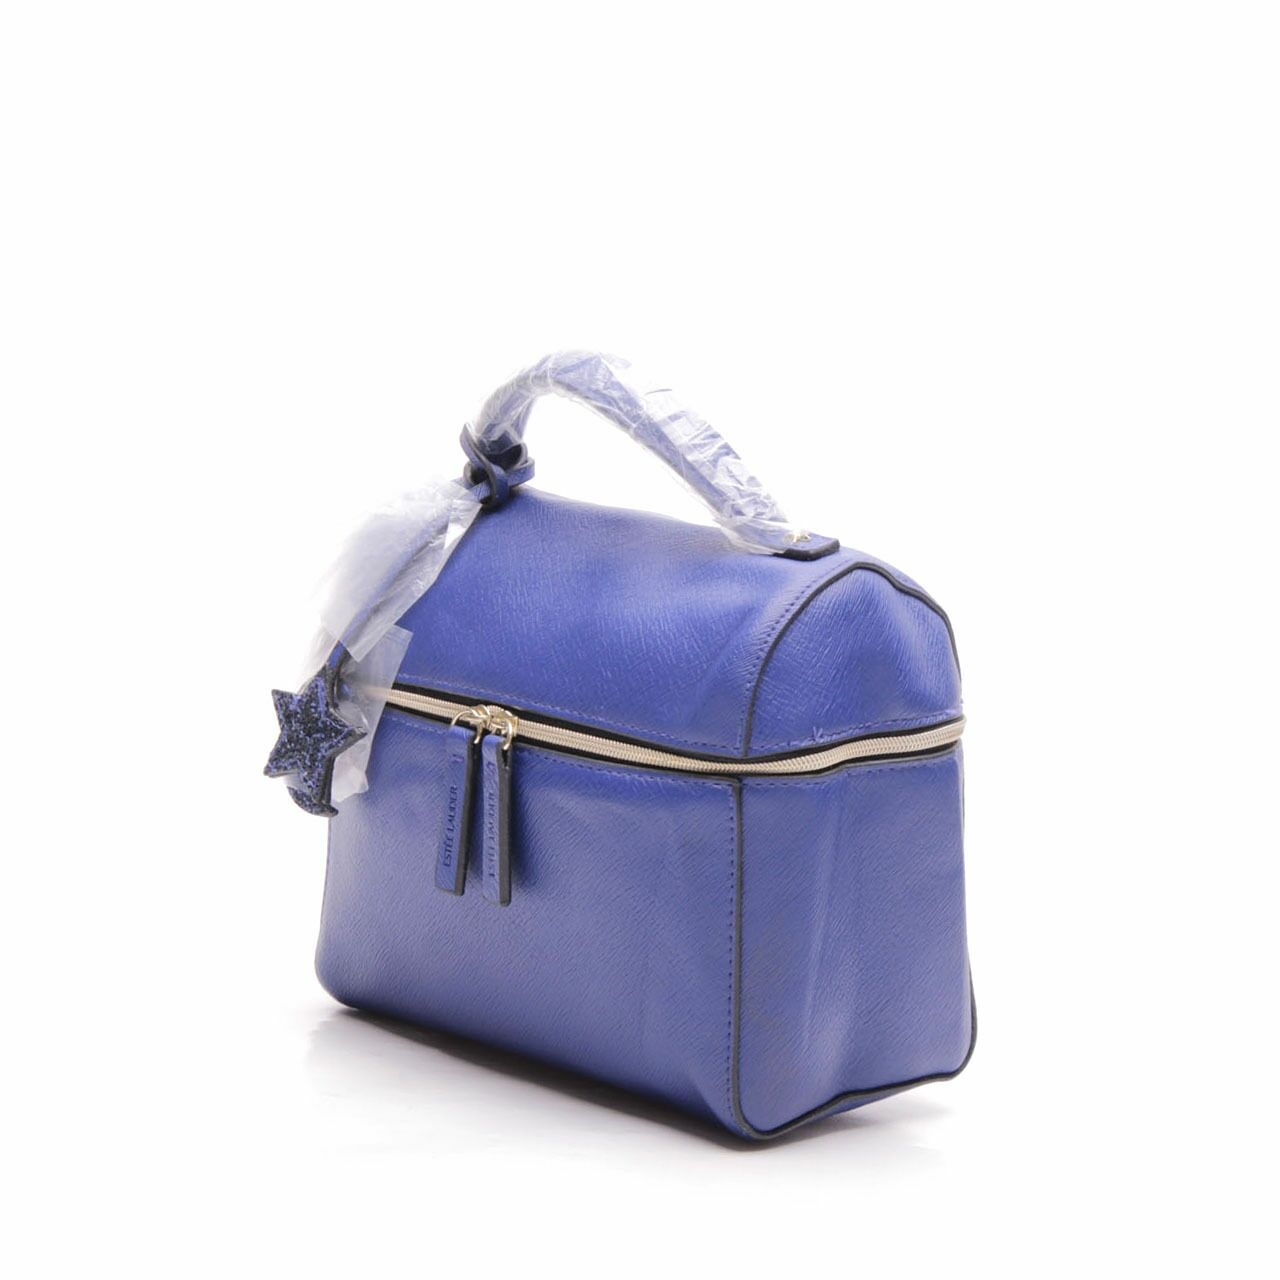 Estee Lauder Blue Handbag